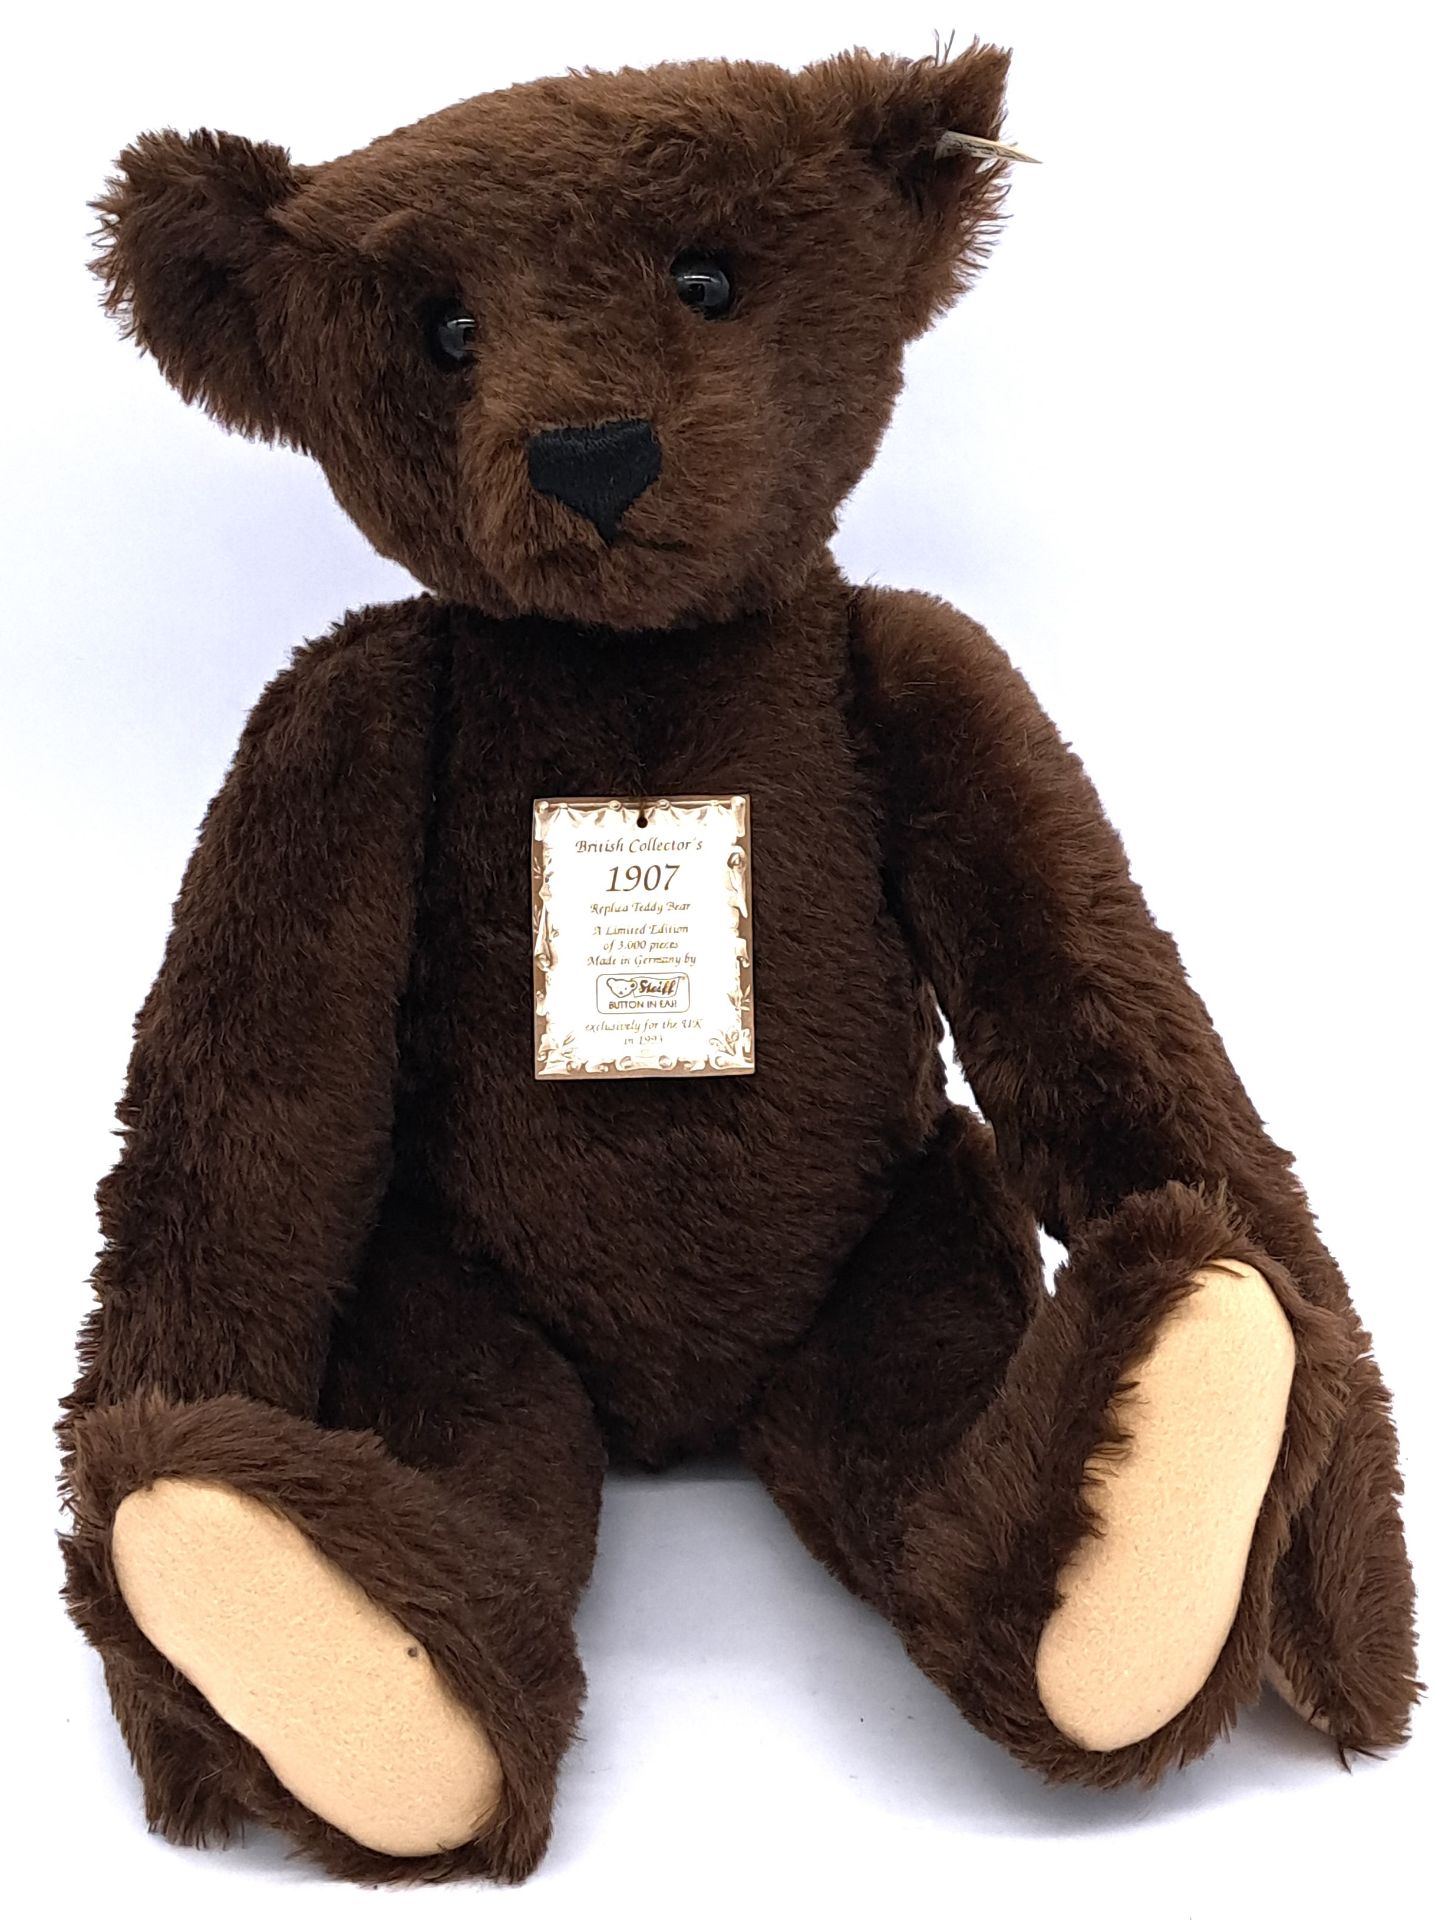 Steiff British Collectors 1907 replica teddy bear - Bild 2 aus 2